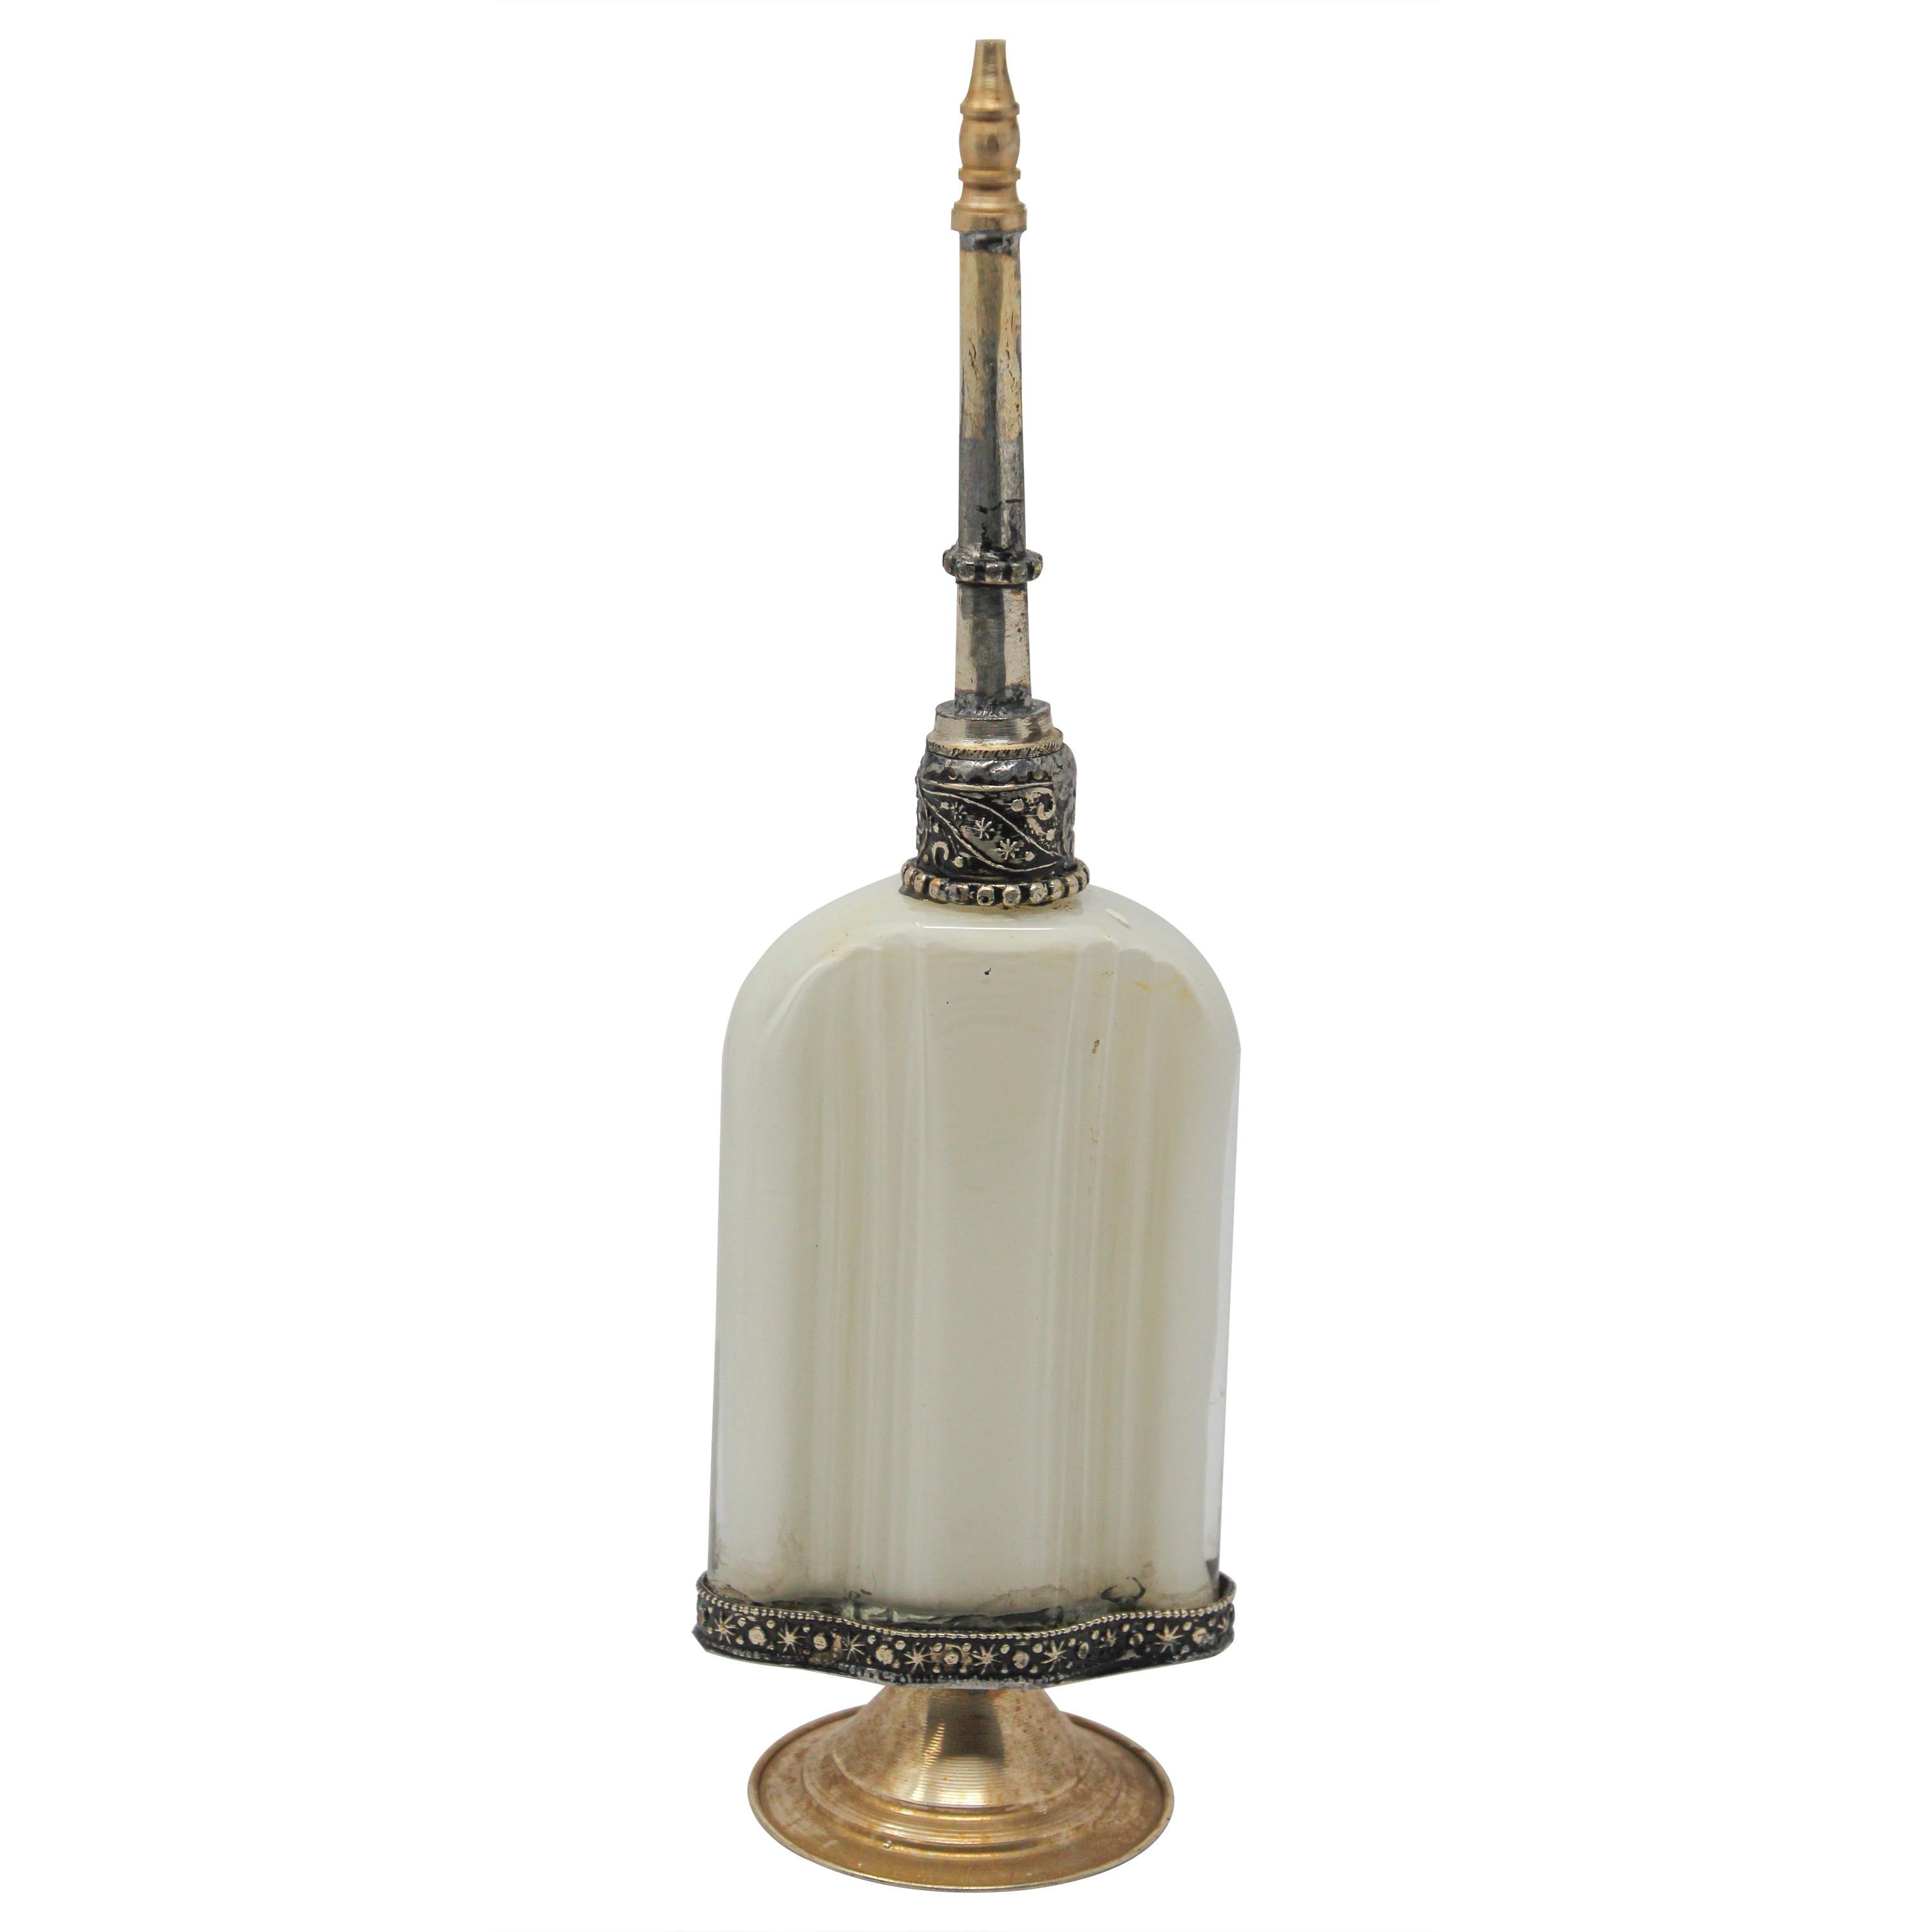 Moorish Decorative Glass Perfume Bottle Sprinkler with Embossed Metal Overlay